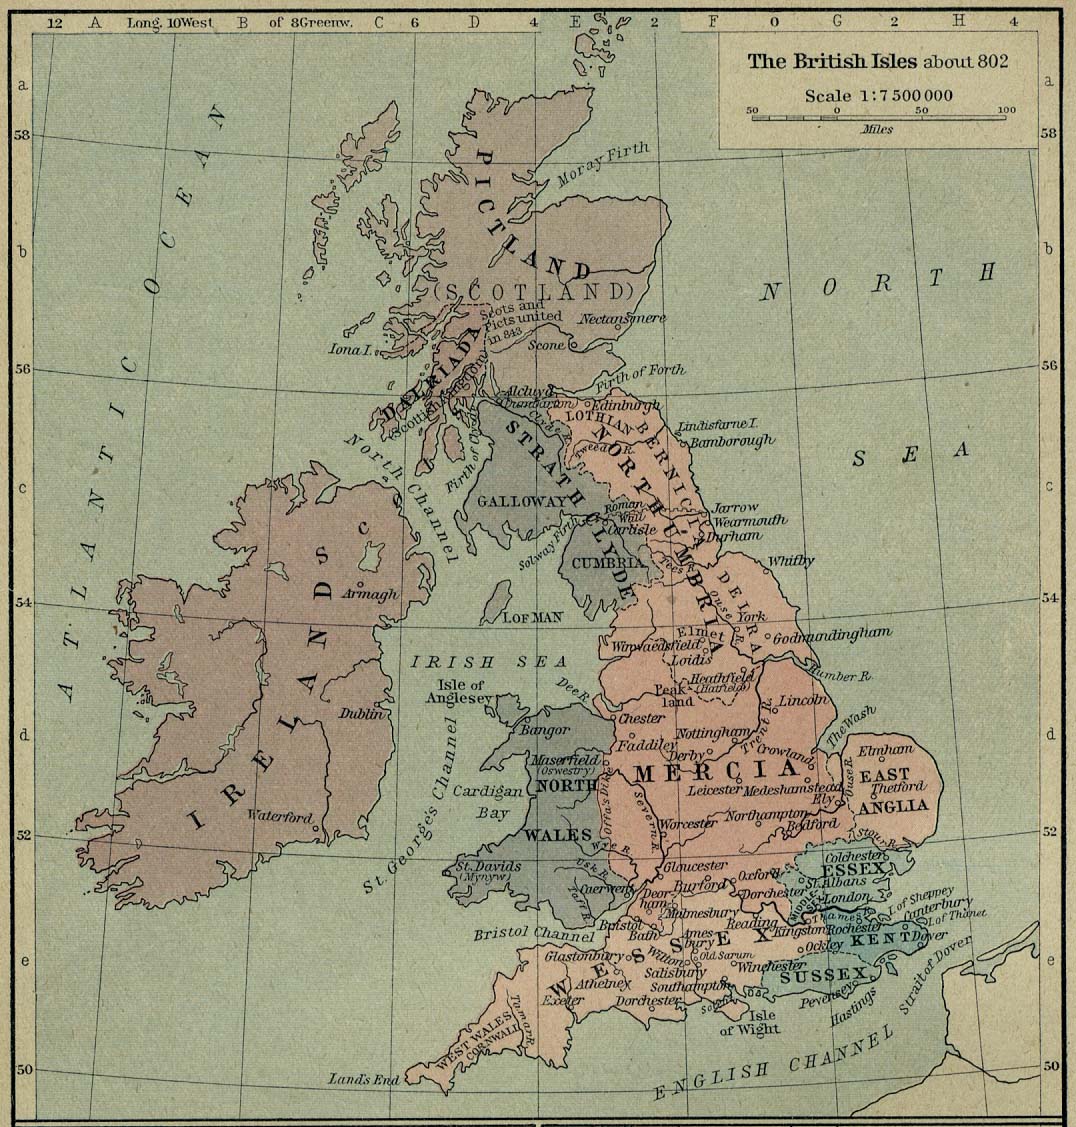 Map of the British Isles 802